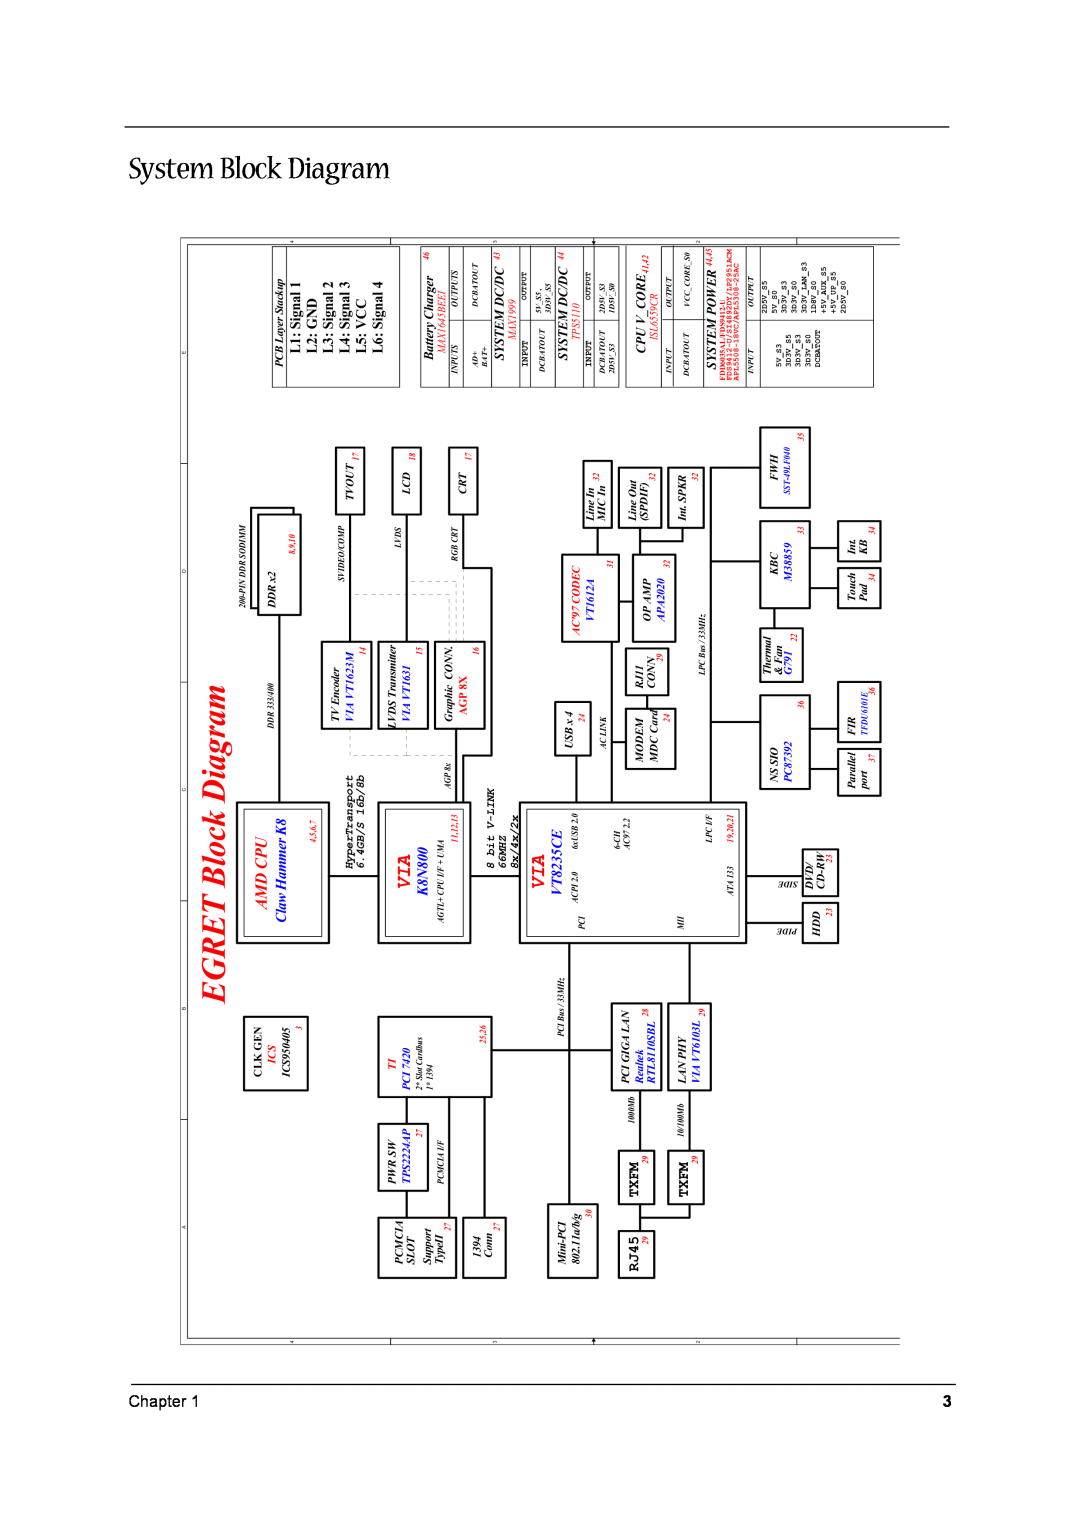 Aspire Digital 1520 EGRET Block Diagram, Amd Cpu, Claw Hammer K8, K8N800, VT8235CE, RJ45, L1 Signal, L2 GND, L3 Signal 